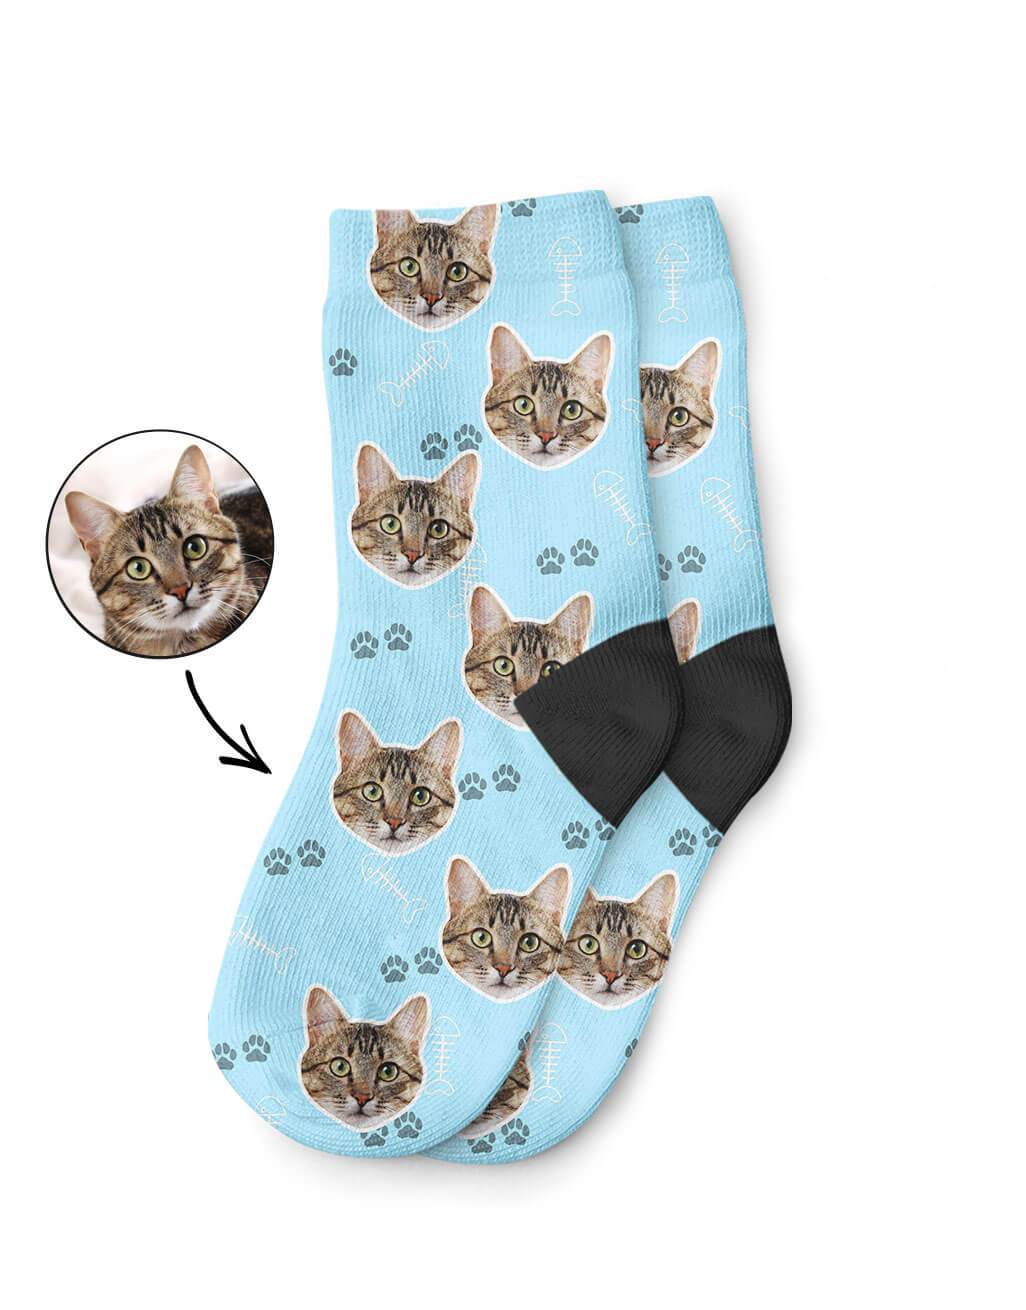 Your Cat On Kids Socks